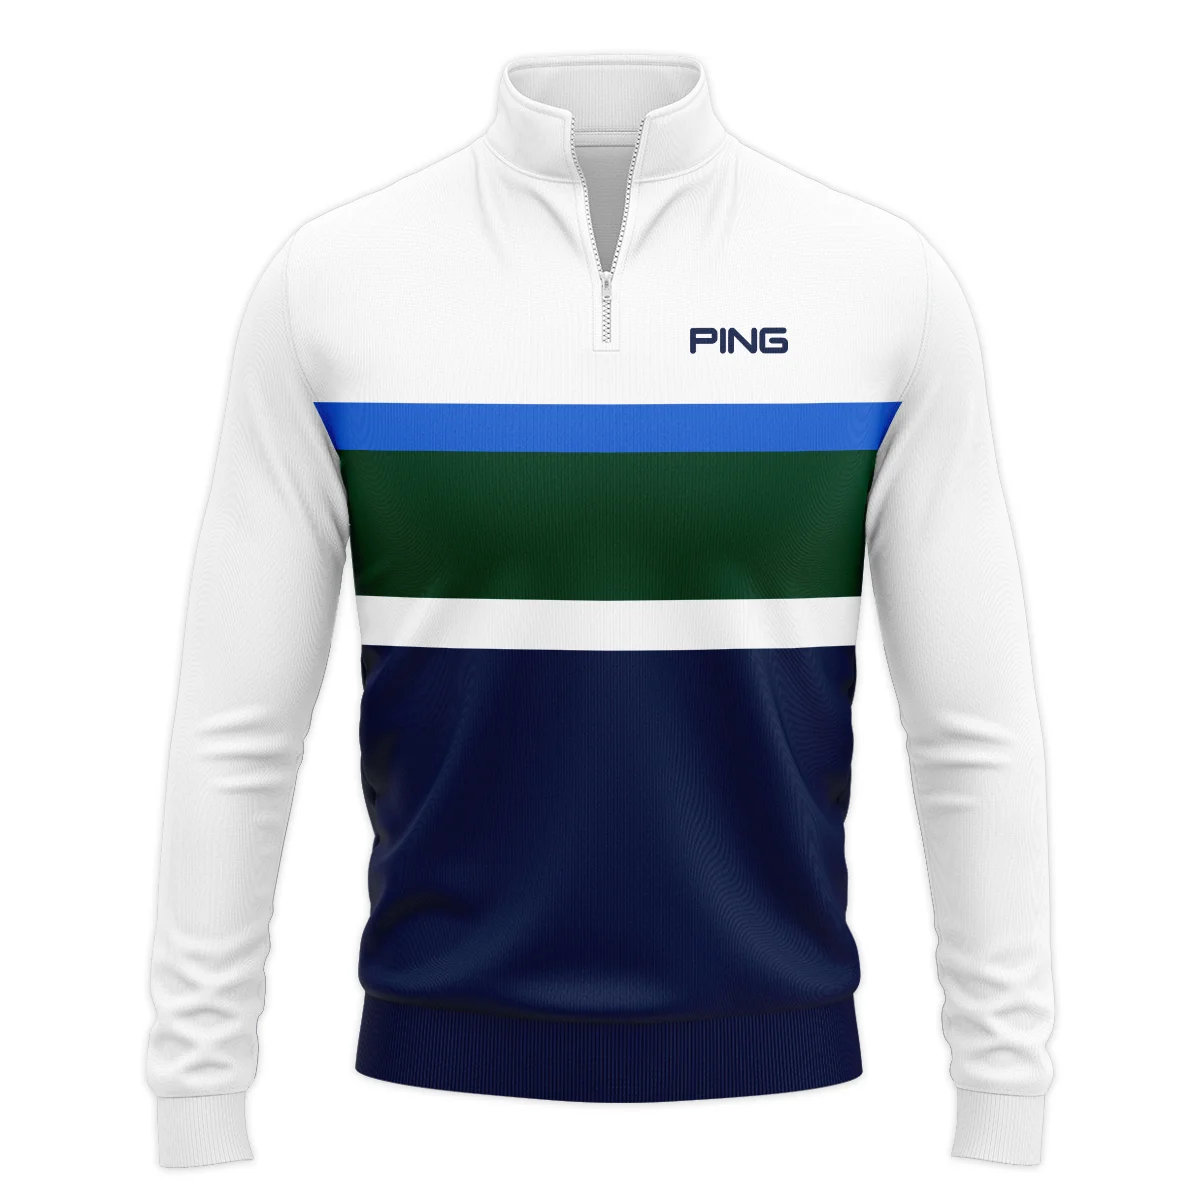 Brand Ping Golf Sport White Background Quarter-Zip Jacket All Over Prints HOBR060724A01PISWZ